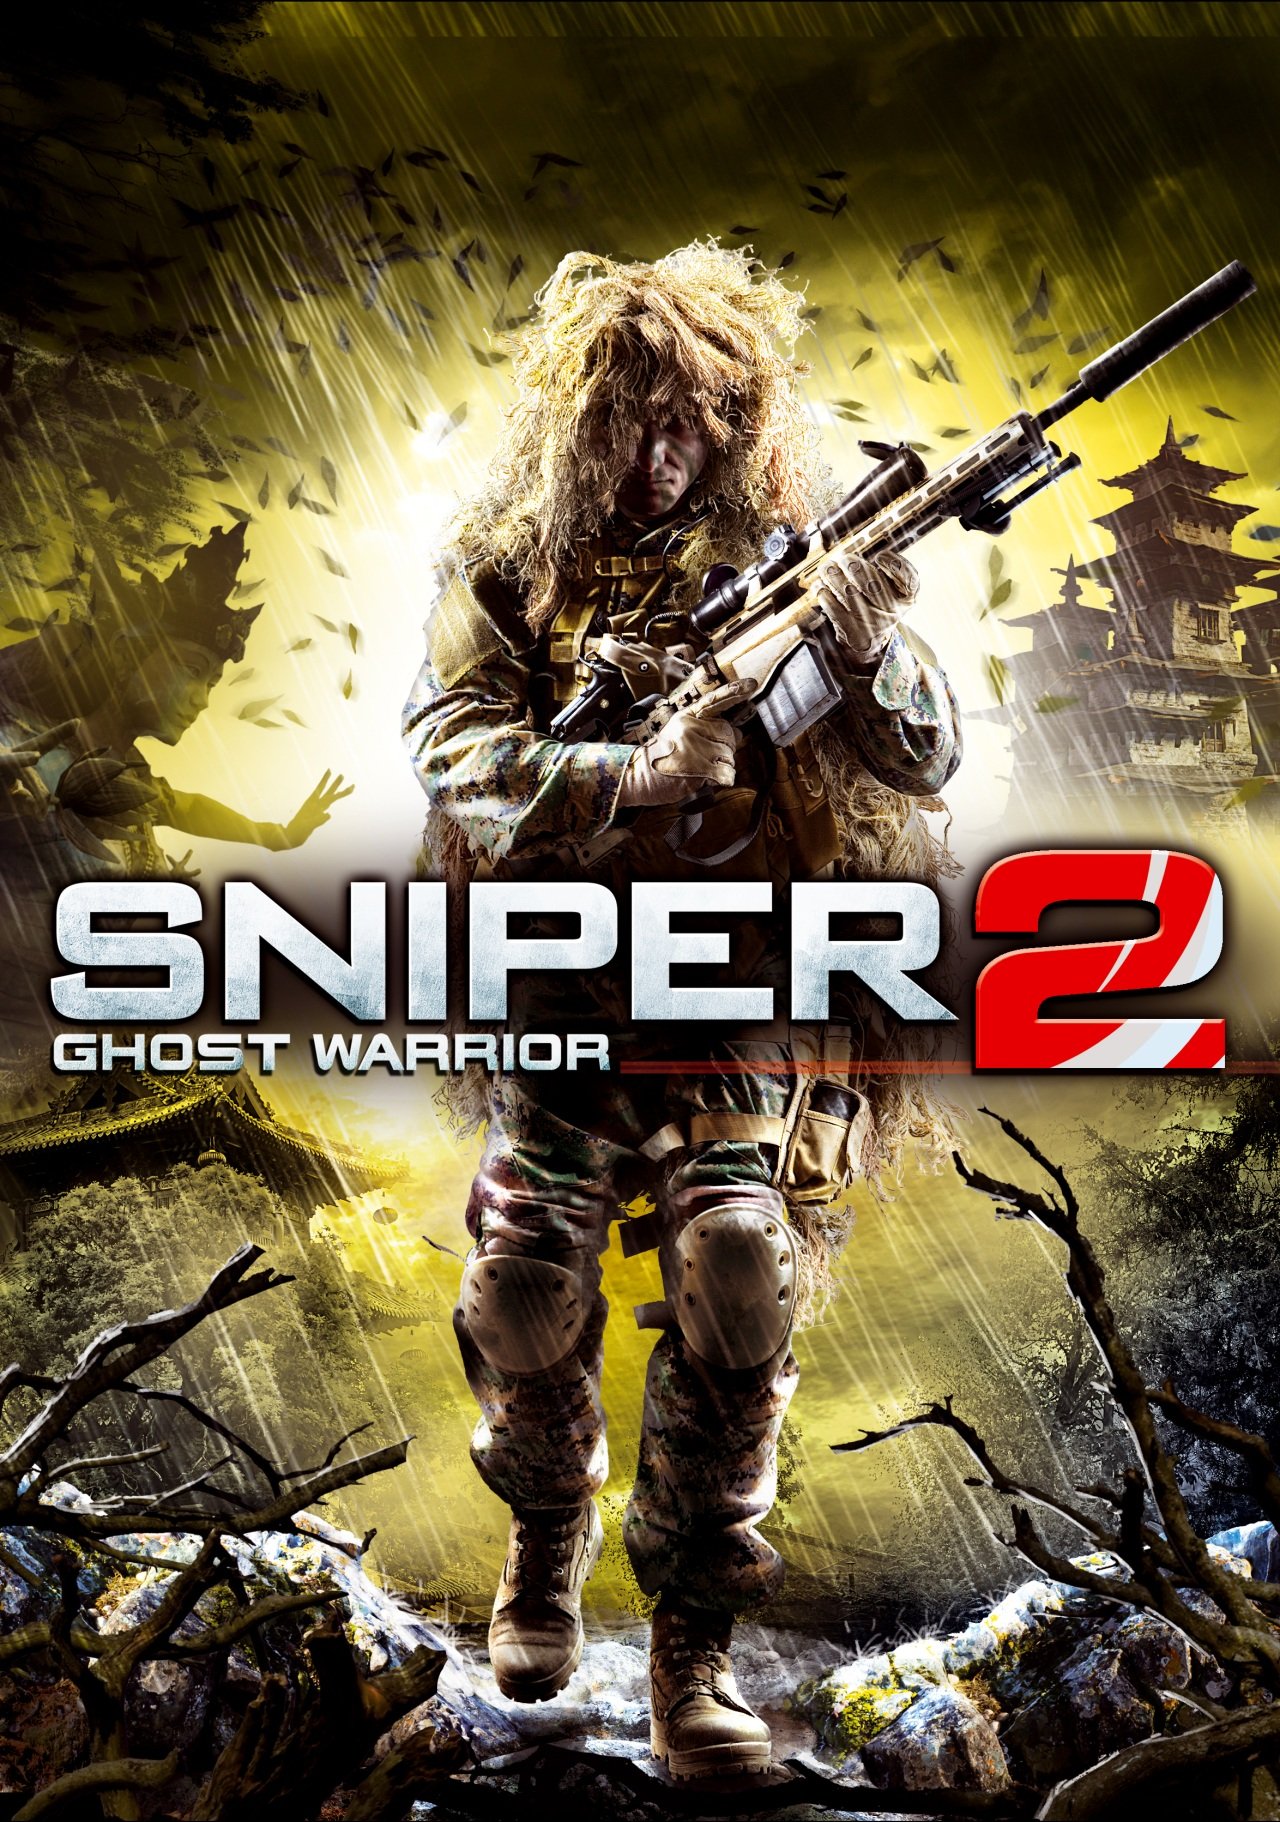 Игры 2 игры 2013. Снайпер воин призрак Xbox 360. Sniper Xbox 360 воин призрак. Sniper 2 Xbox 360. Sniper 2 Ghost Warrior Xbox 360.